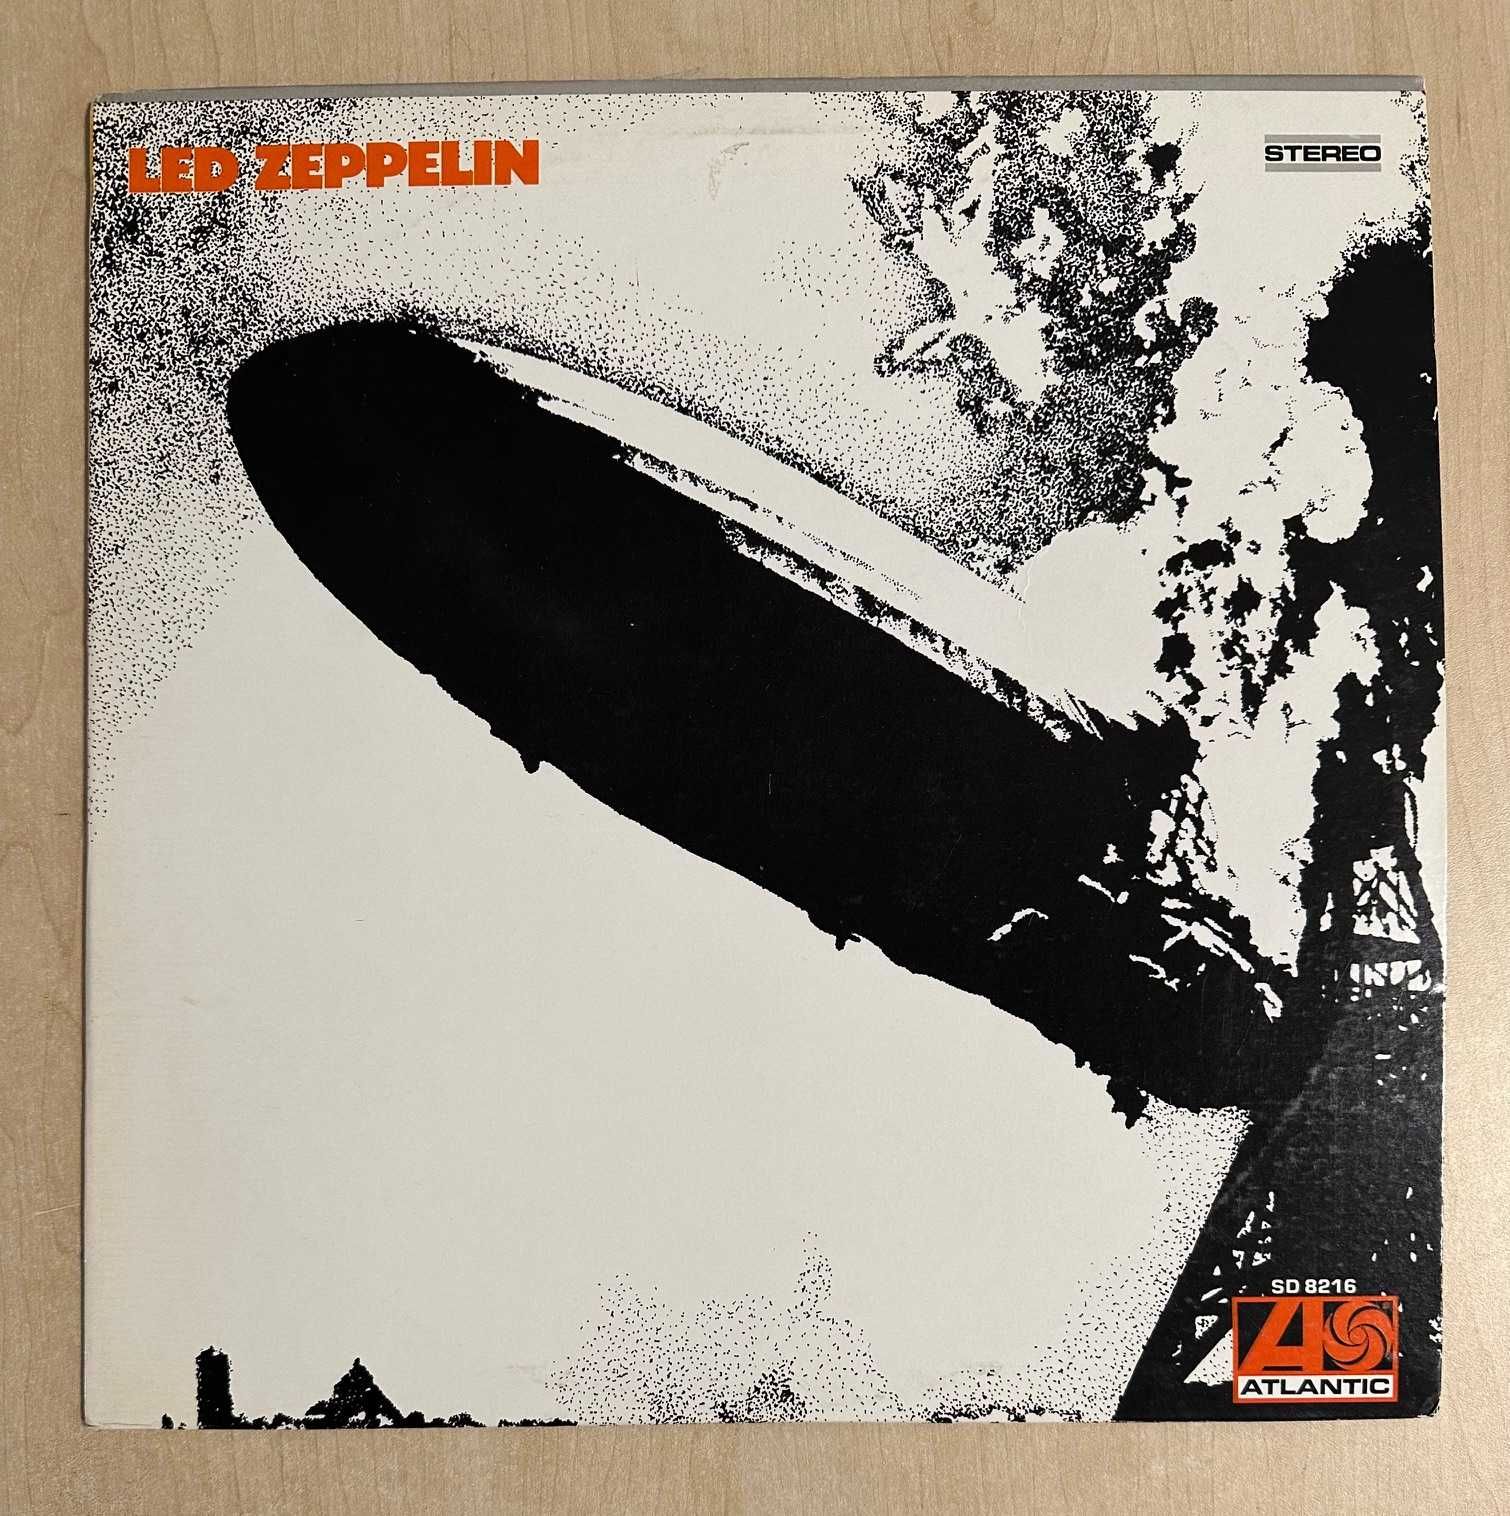 Led Zeppelin	Led Zeppelin I	Atlantic  1841 Broadway